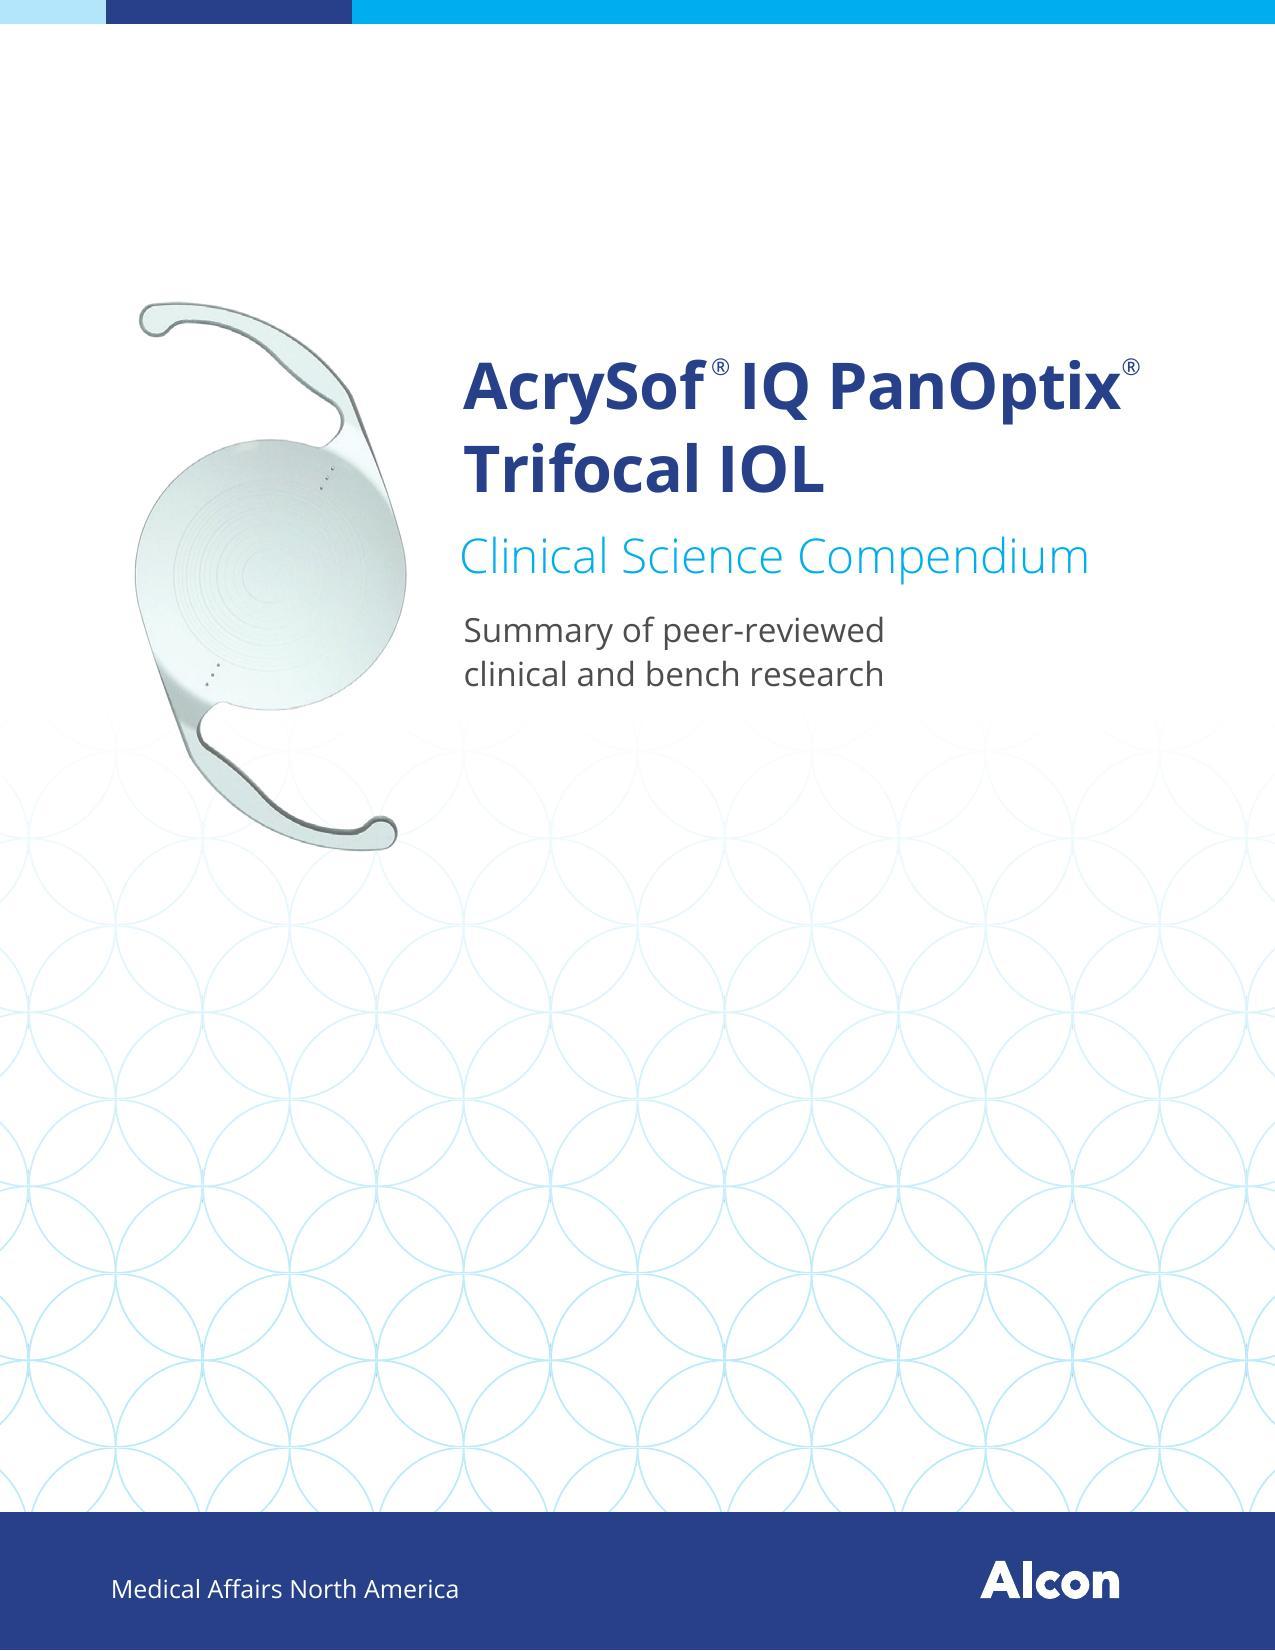 acrysof-iq-panoptix-trifocal-iol-clinical-science-compendium.pdf